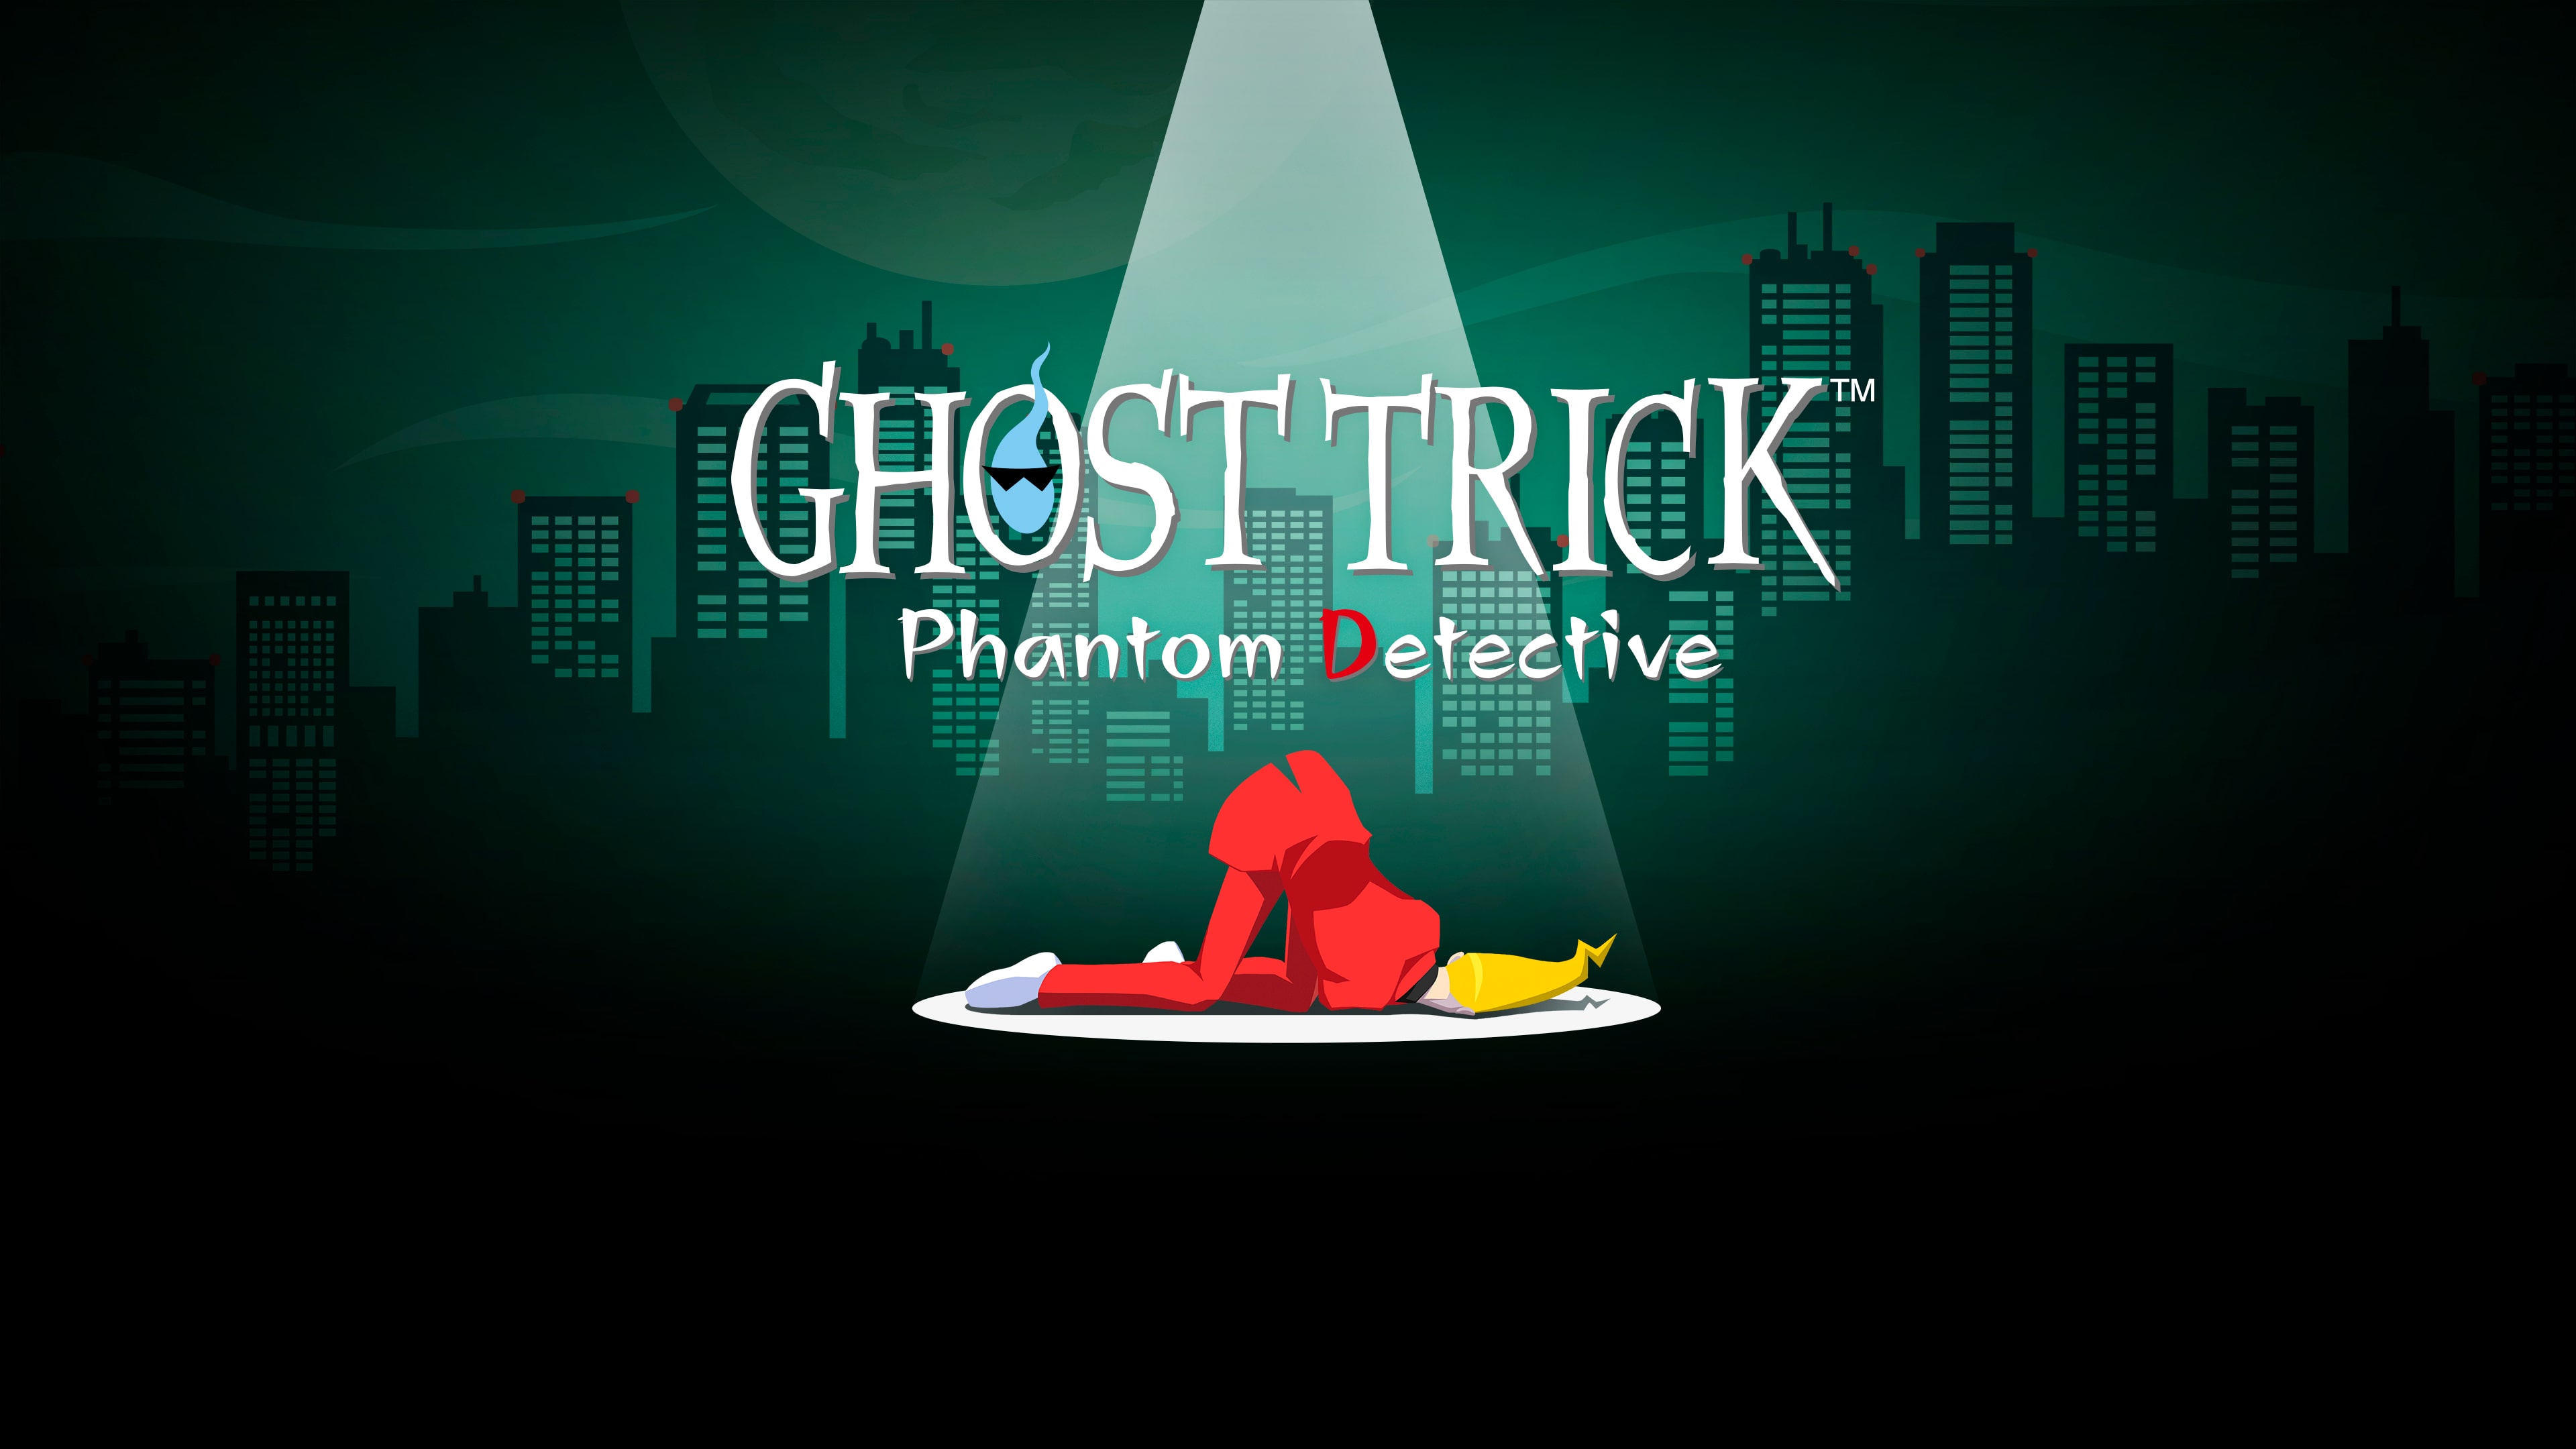 Ghost Trick: Phantom Detective (日语, 韩语, 简体中文, 繁体中文, 英语)